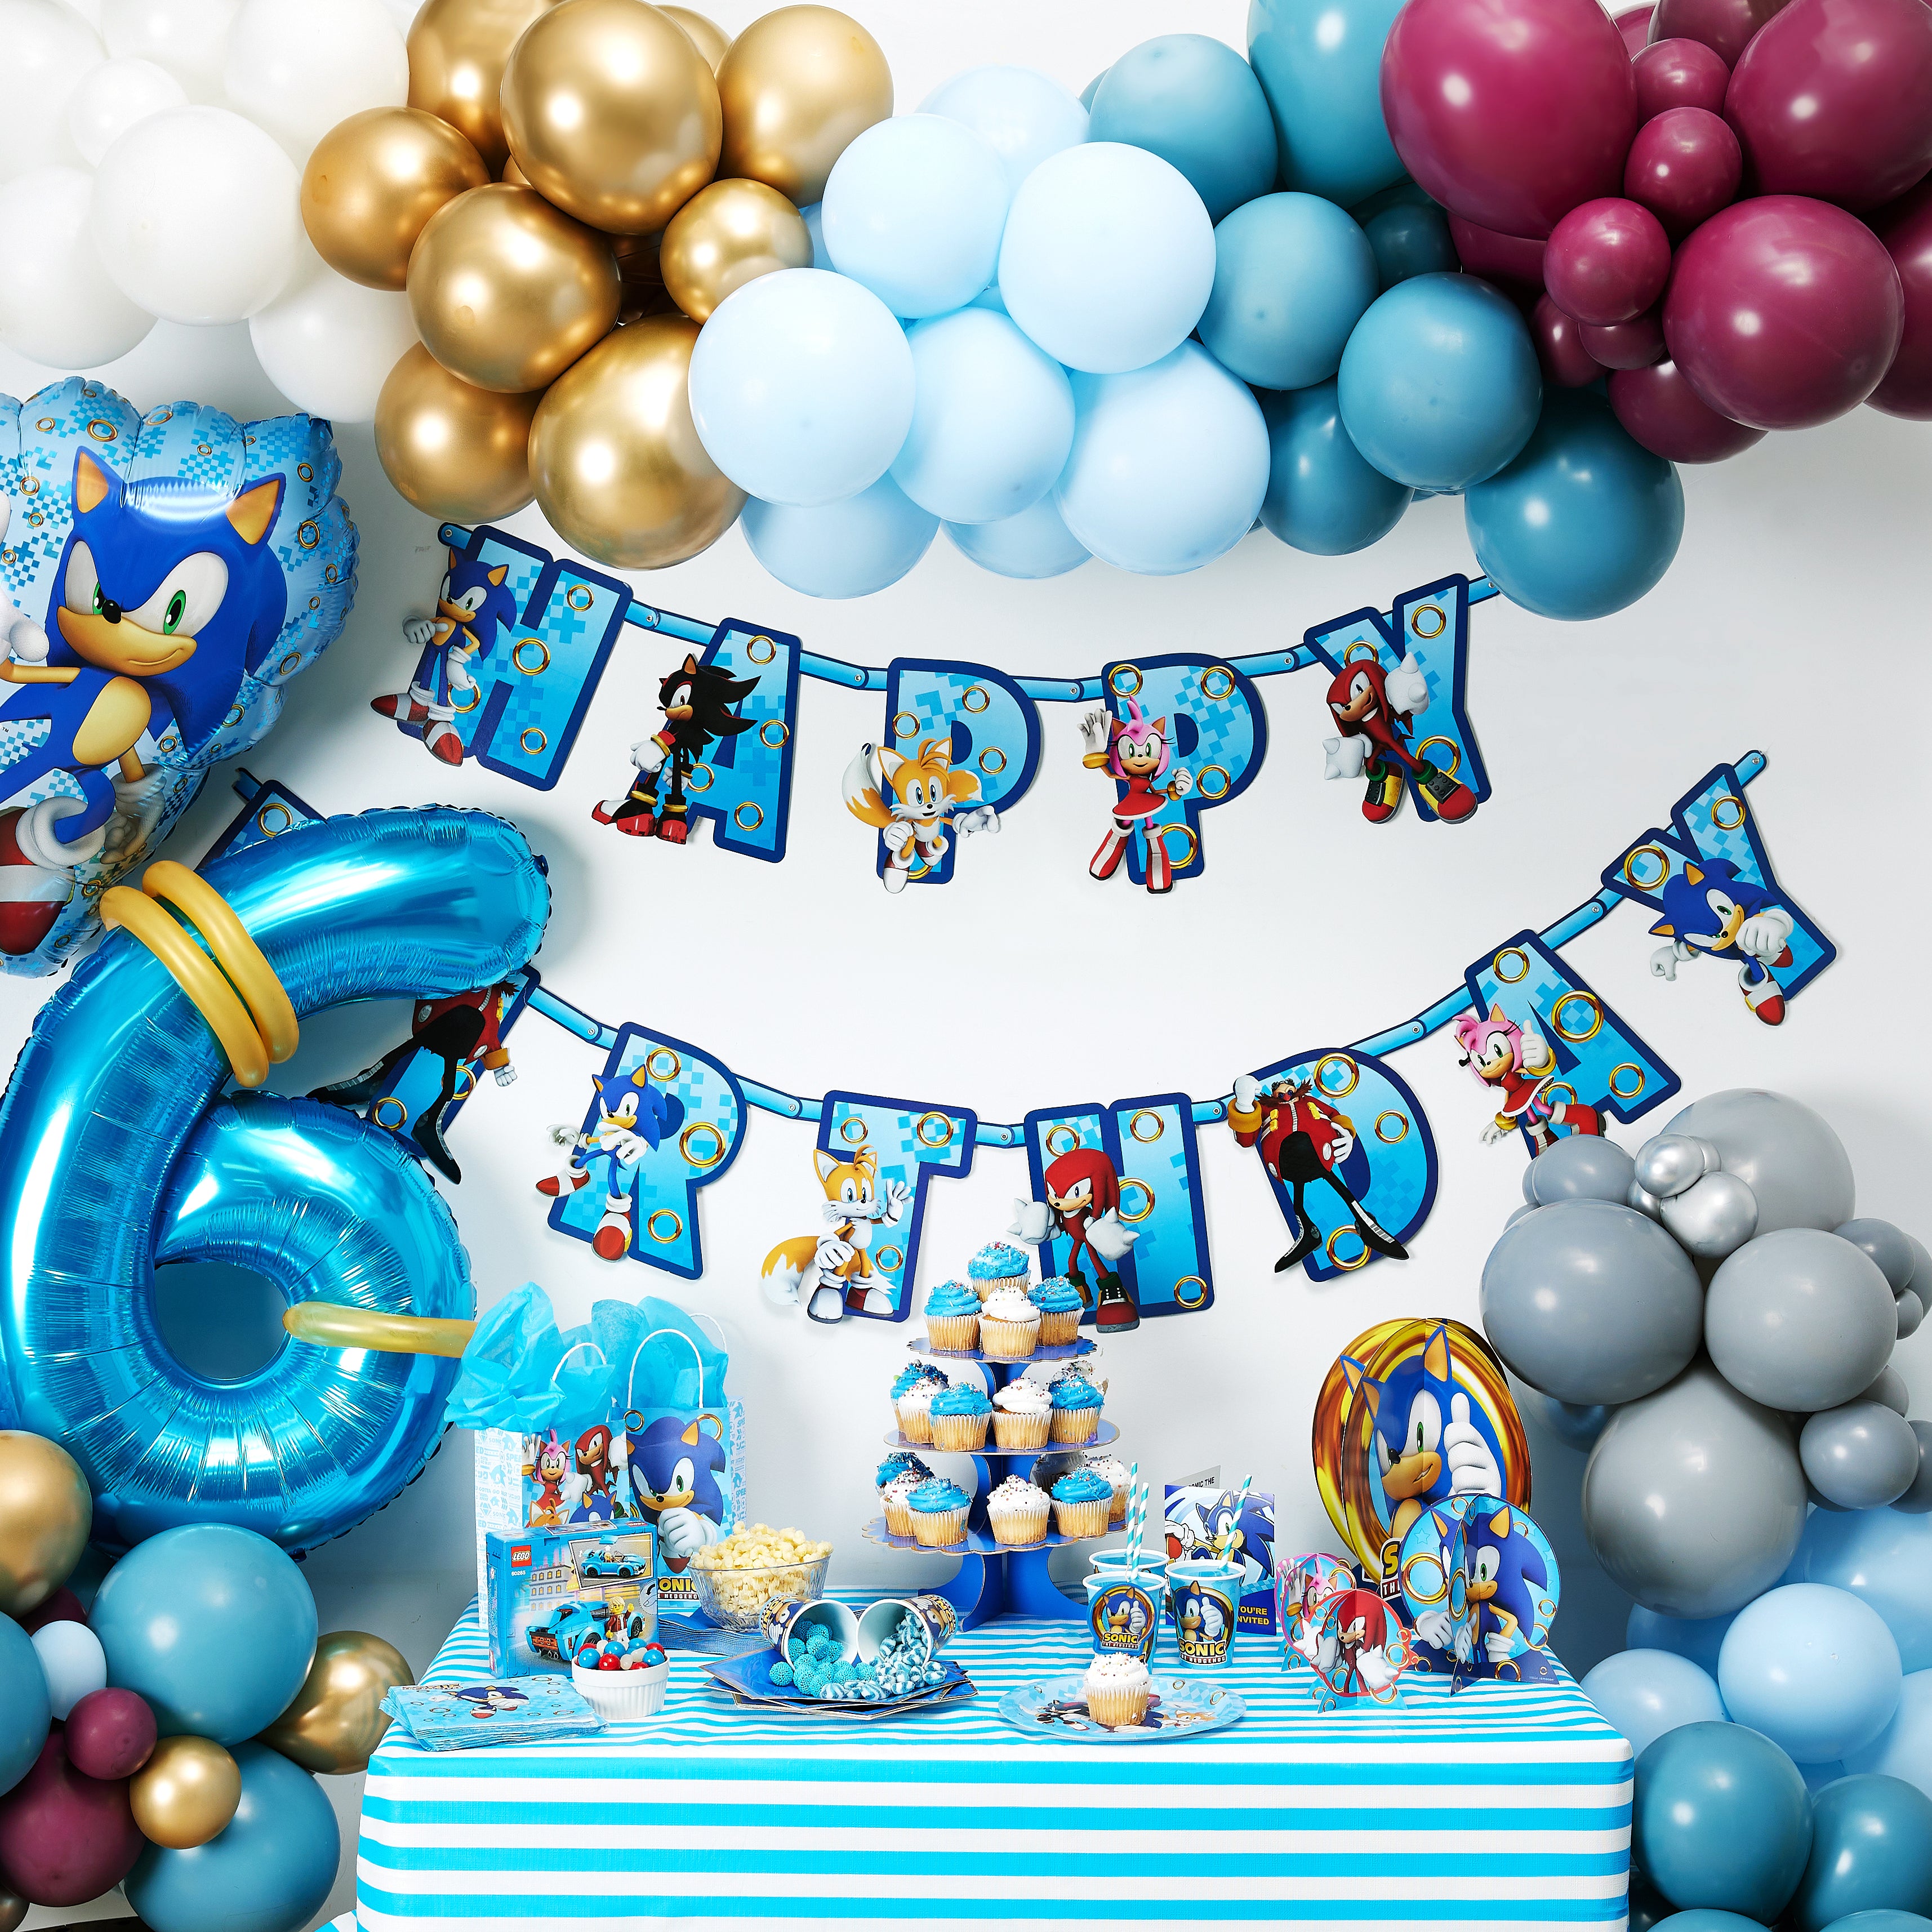 Sonic The Hedgehog Birthday Party Ideas